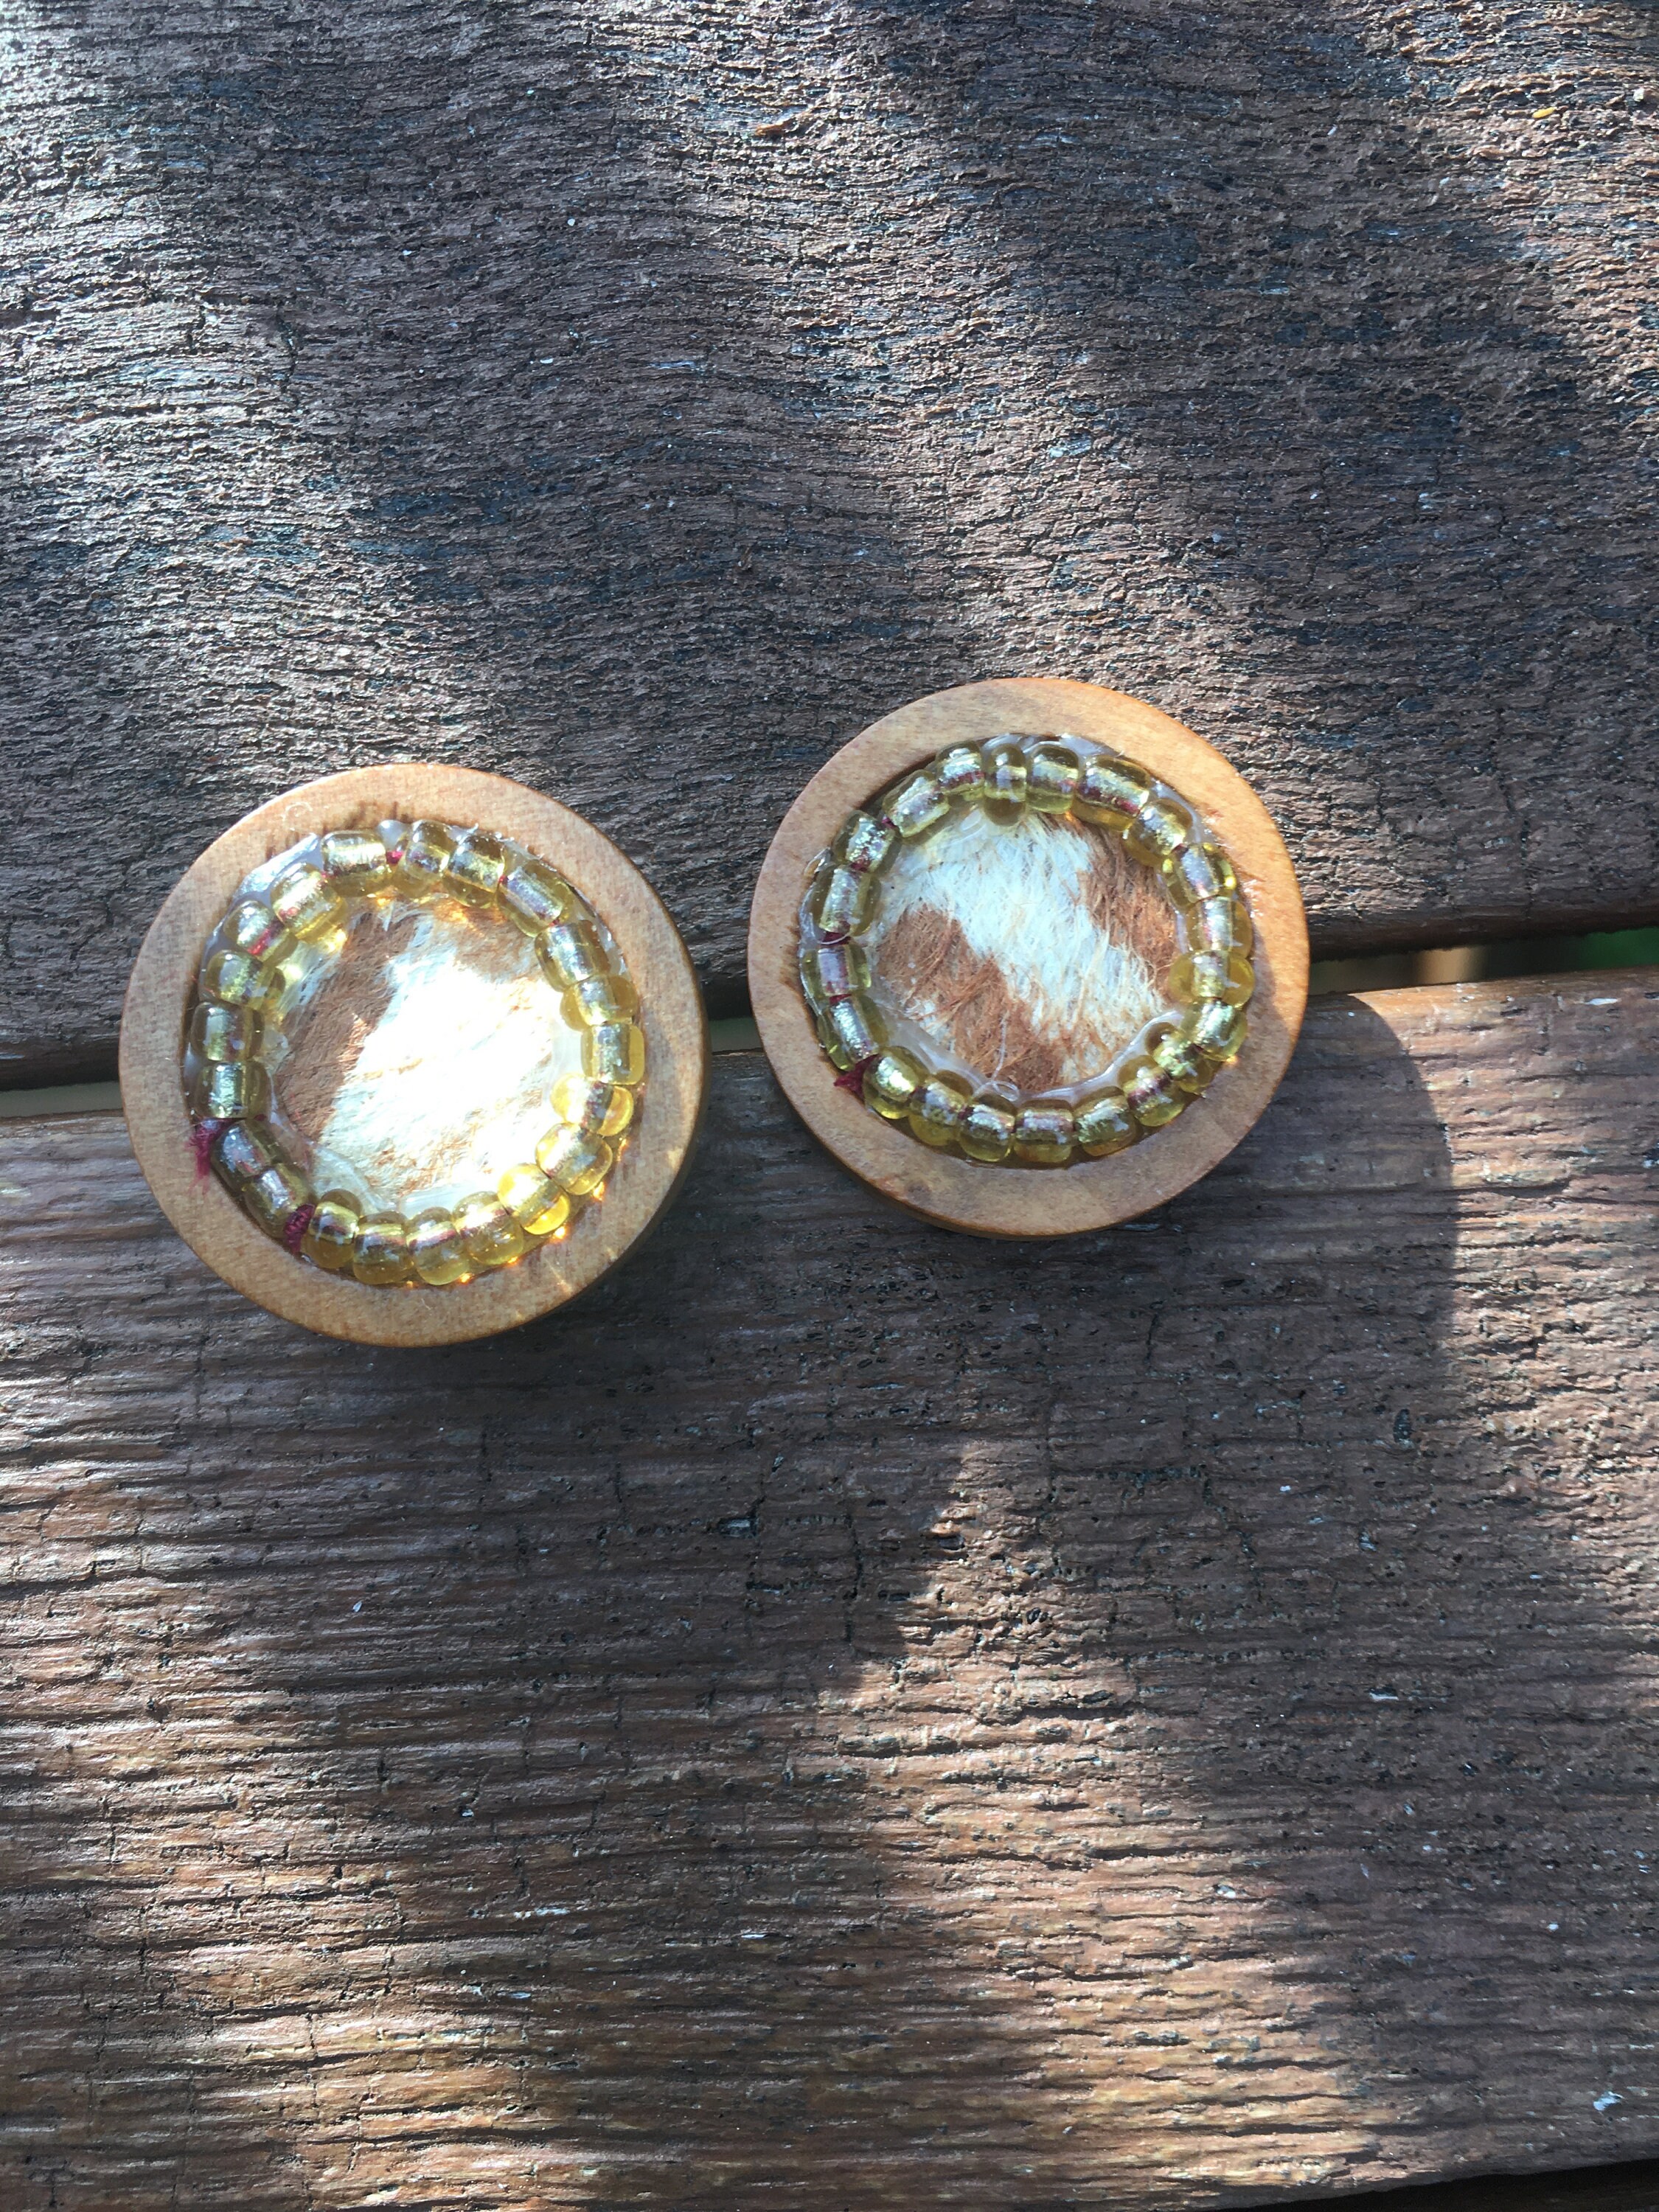 6 Bead Beaded Earrings 18mm Round Circle Stud Post & Backs W/connector Loop  Holes Dangle Style Earring Findings Jewelry Making 